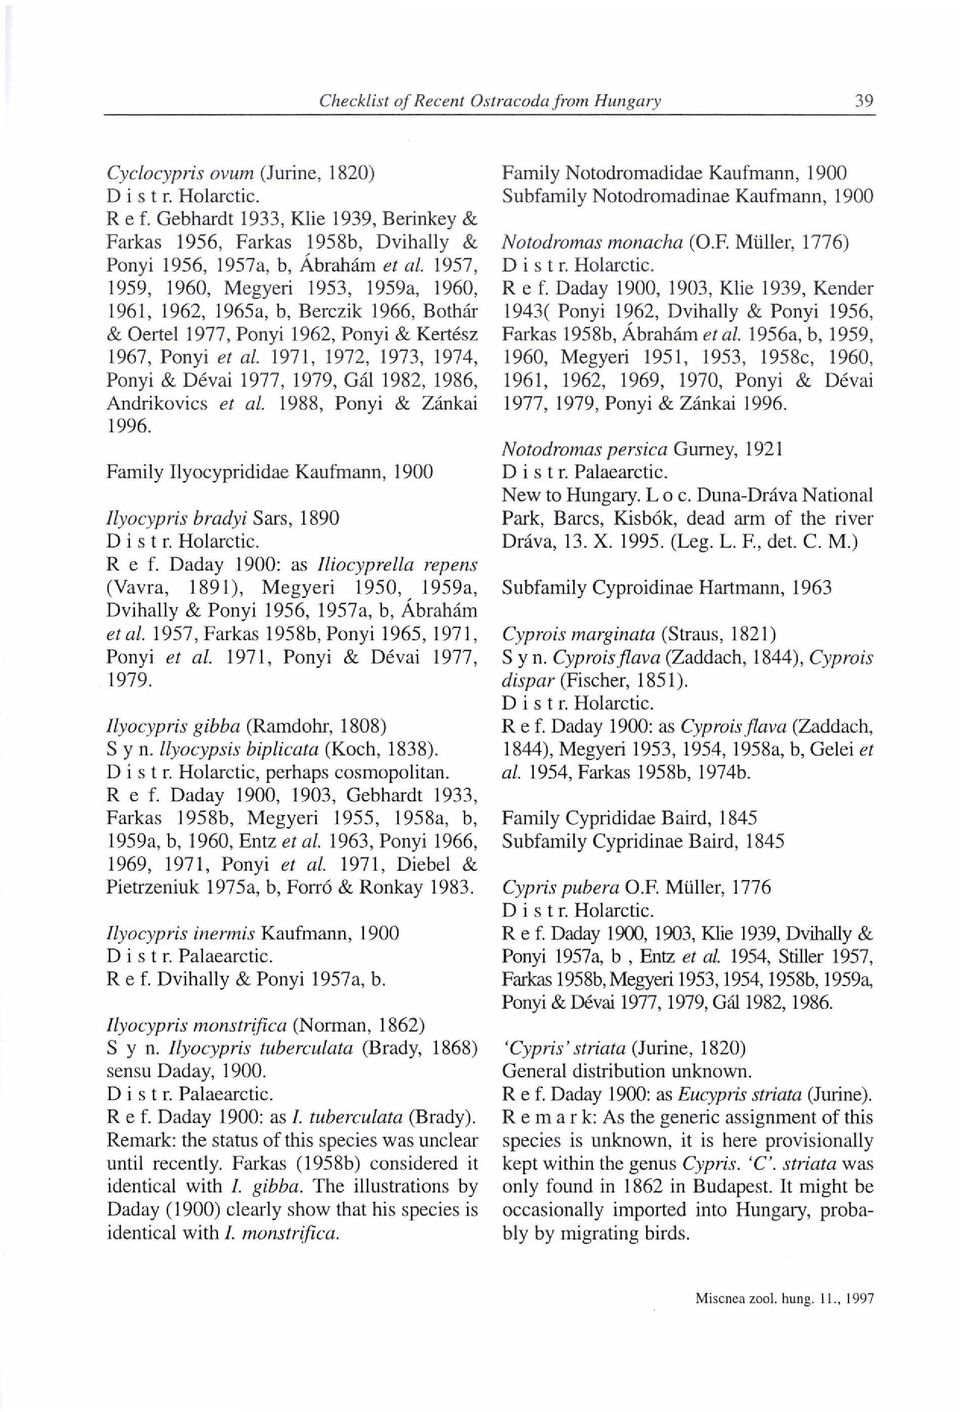 1971, 1972, 1973, 1974, Ponyi & Dévai 1977, 1979, Gál 1982, 1986, Andrikovics et al. 1988, Ponyi & Zánkai 1996. Family Ilyocyprididae Kaufmann, 1900 Ilyocypris bradyi Sars, 1890 Ref.